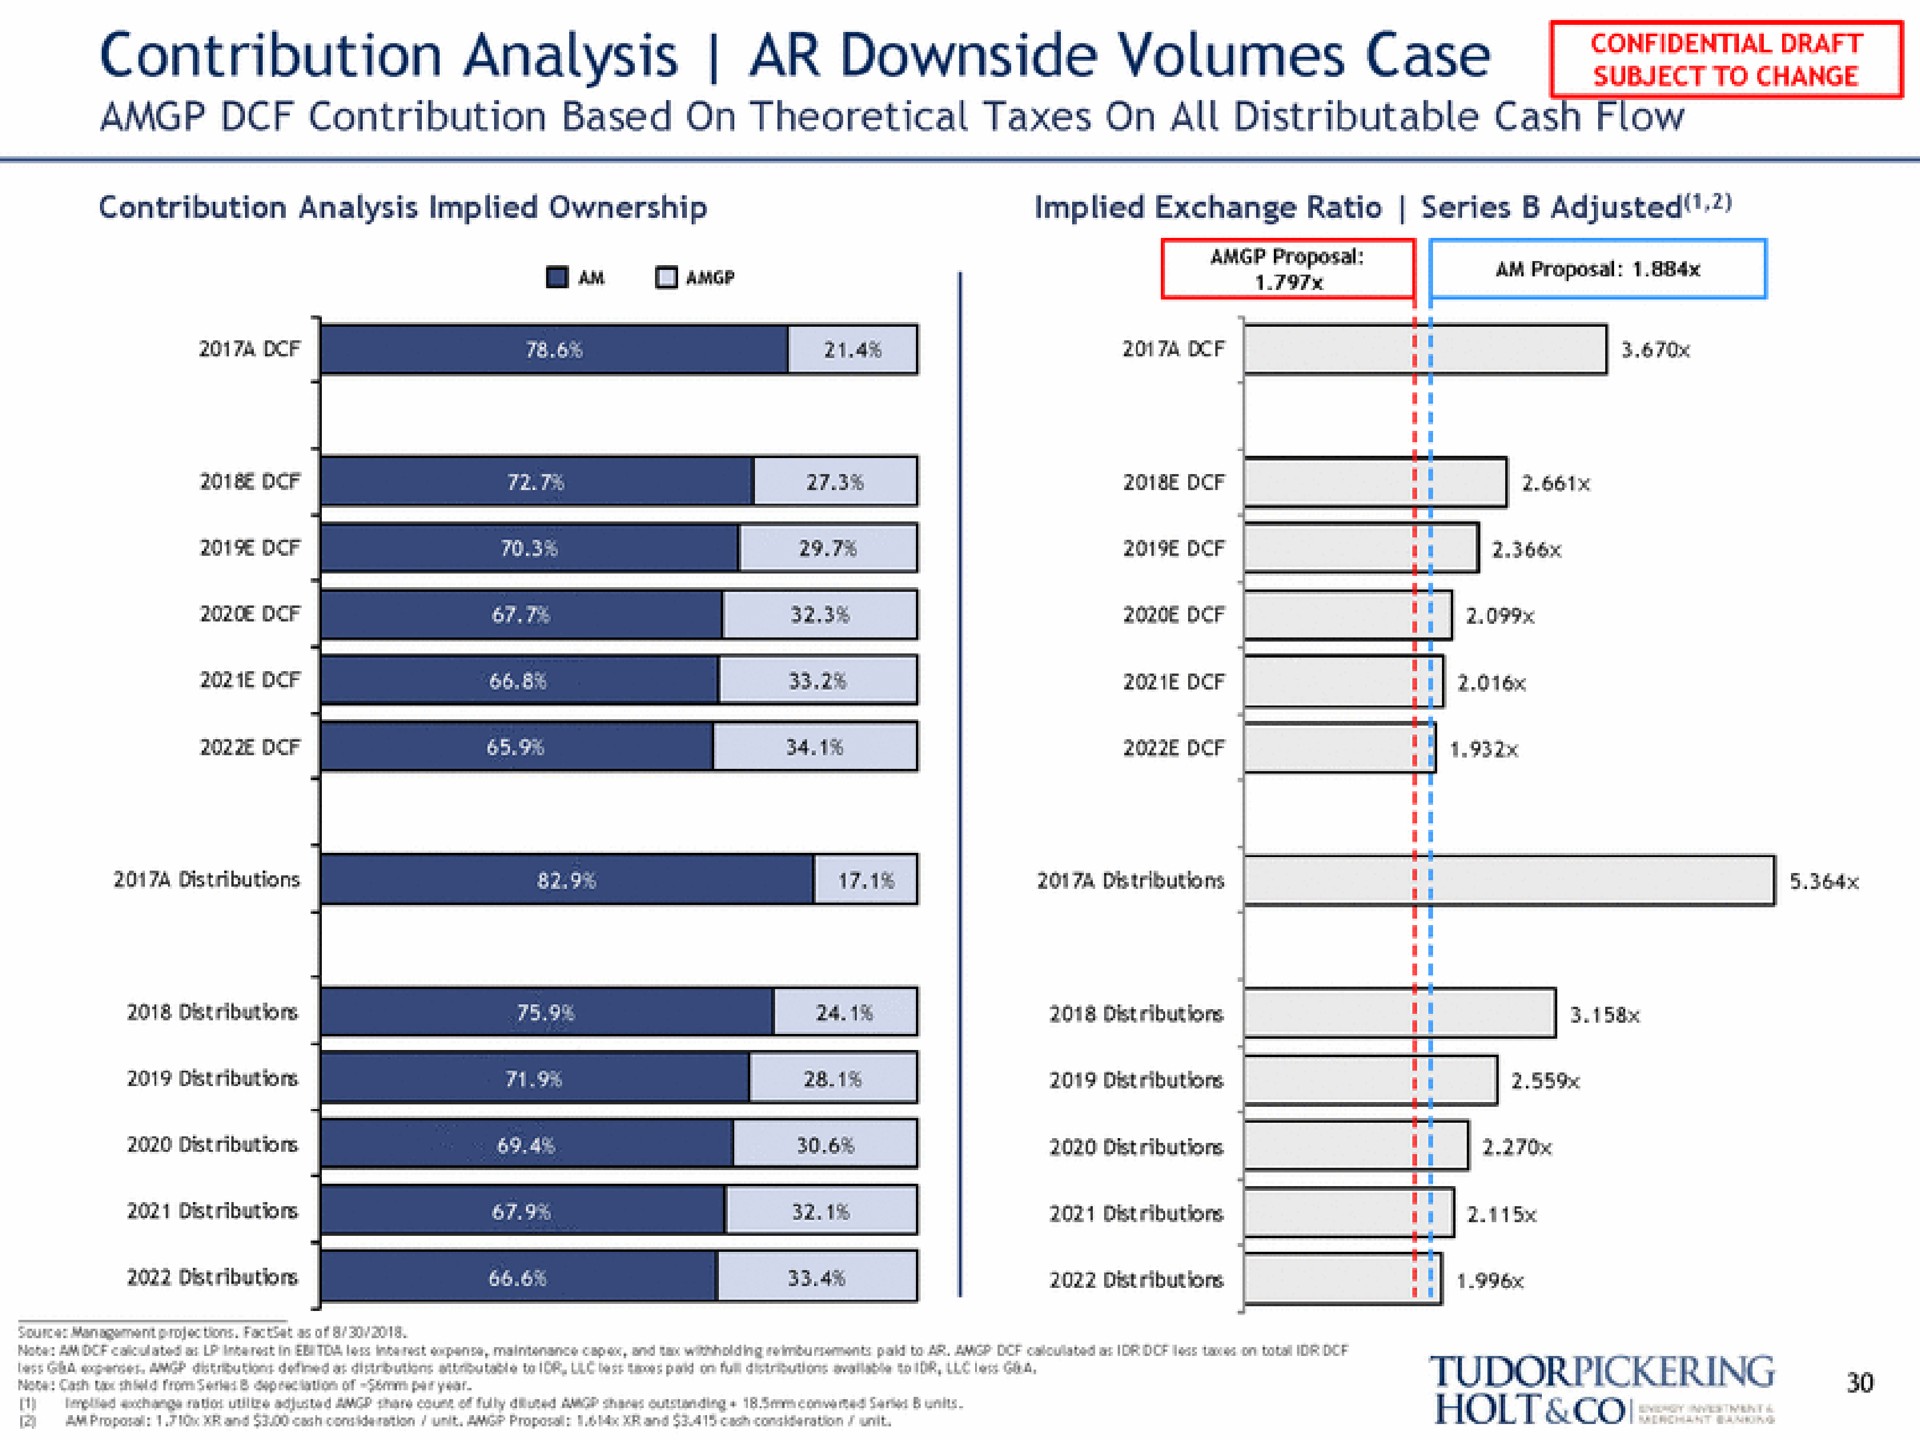 contribution analysis downside volumes case holt | Tudor, Pickering, Holt & Co